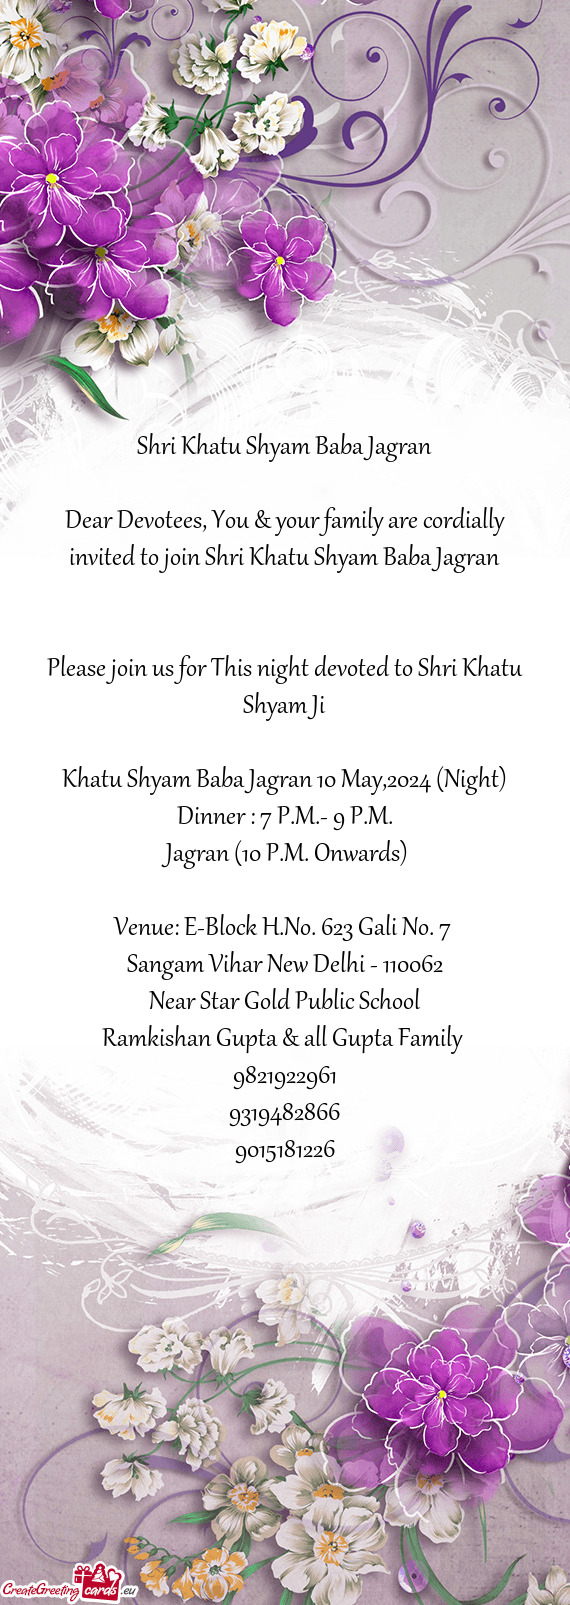 Please join us for This night devoted to Shri Khatu Shyam Ji